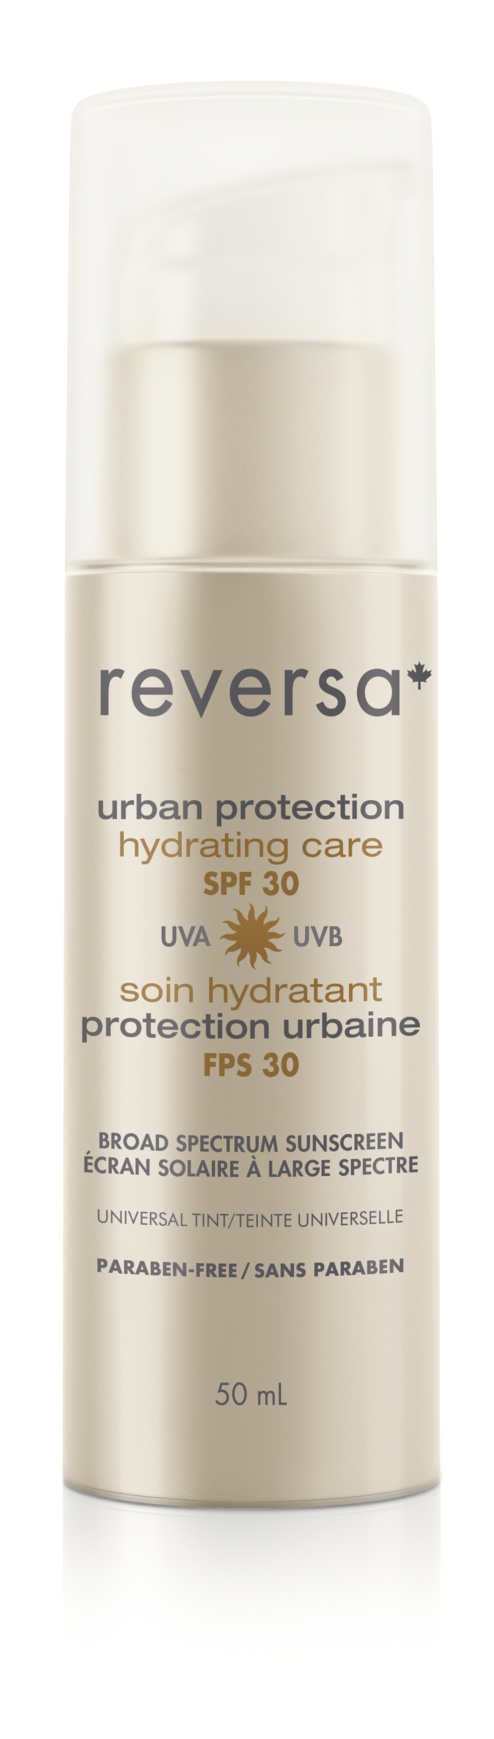 reversa Urban Protection Hydrating Care SPF 30